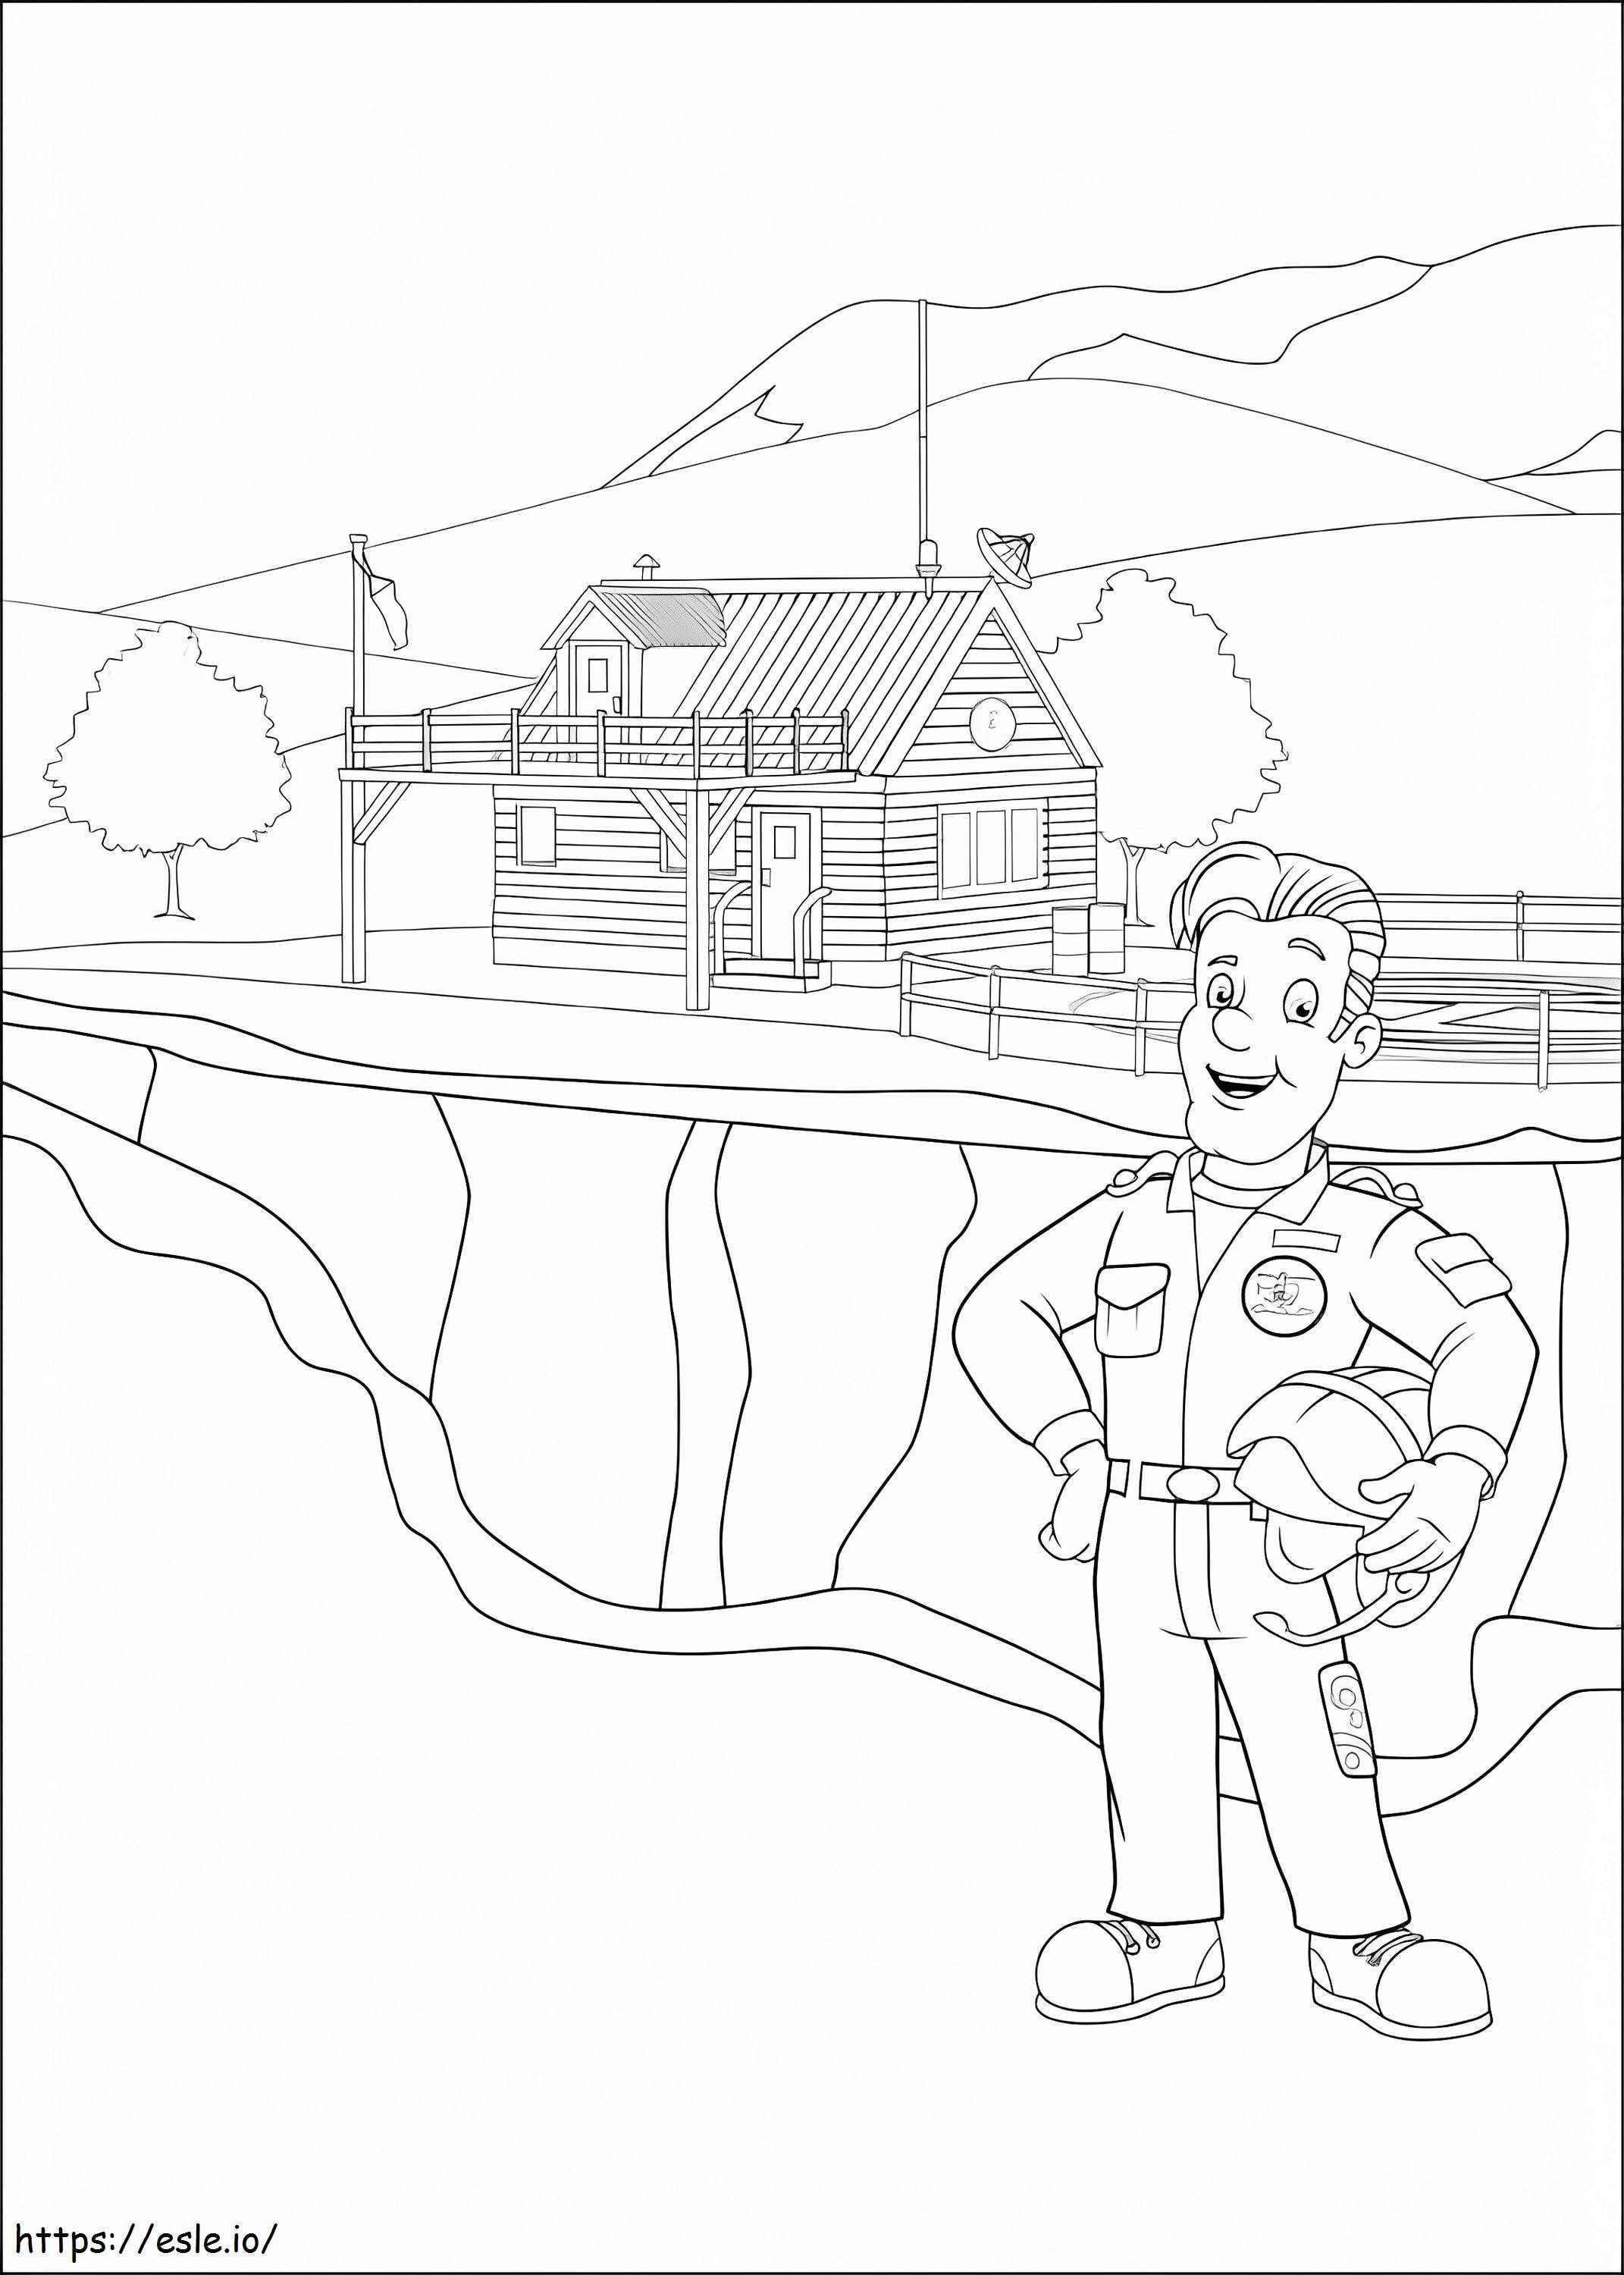 Fireman Sam 3 coloring page